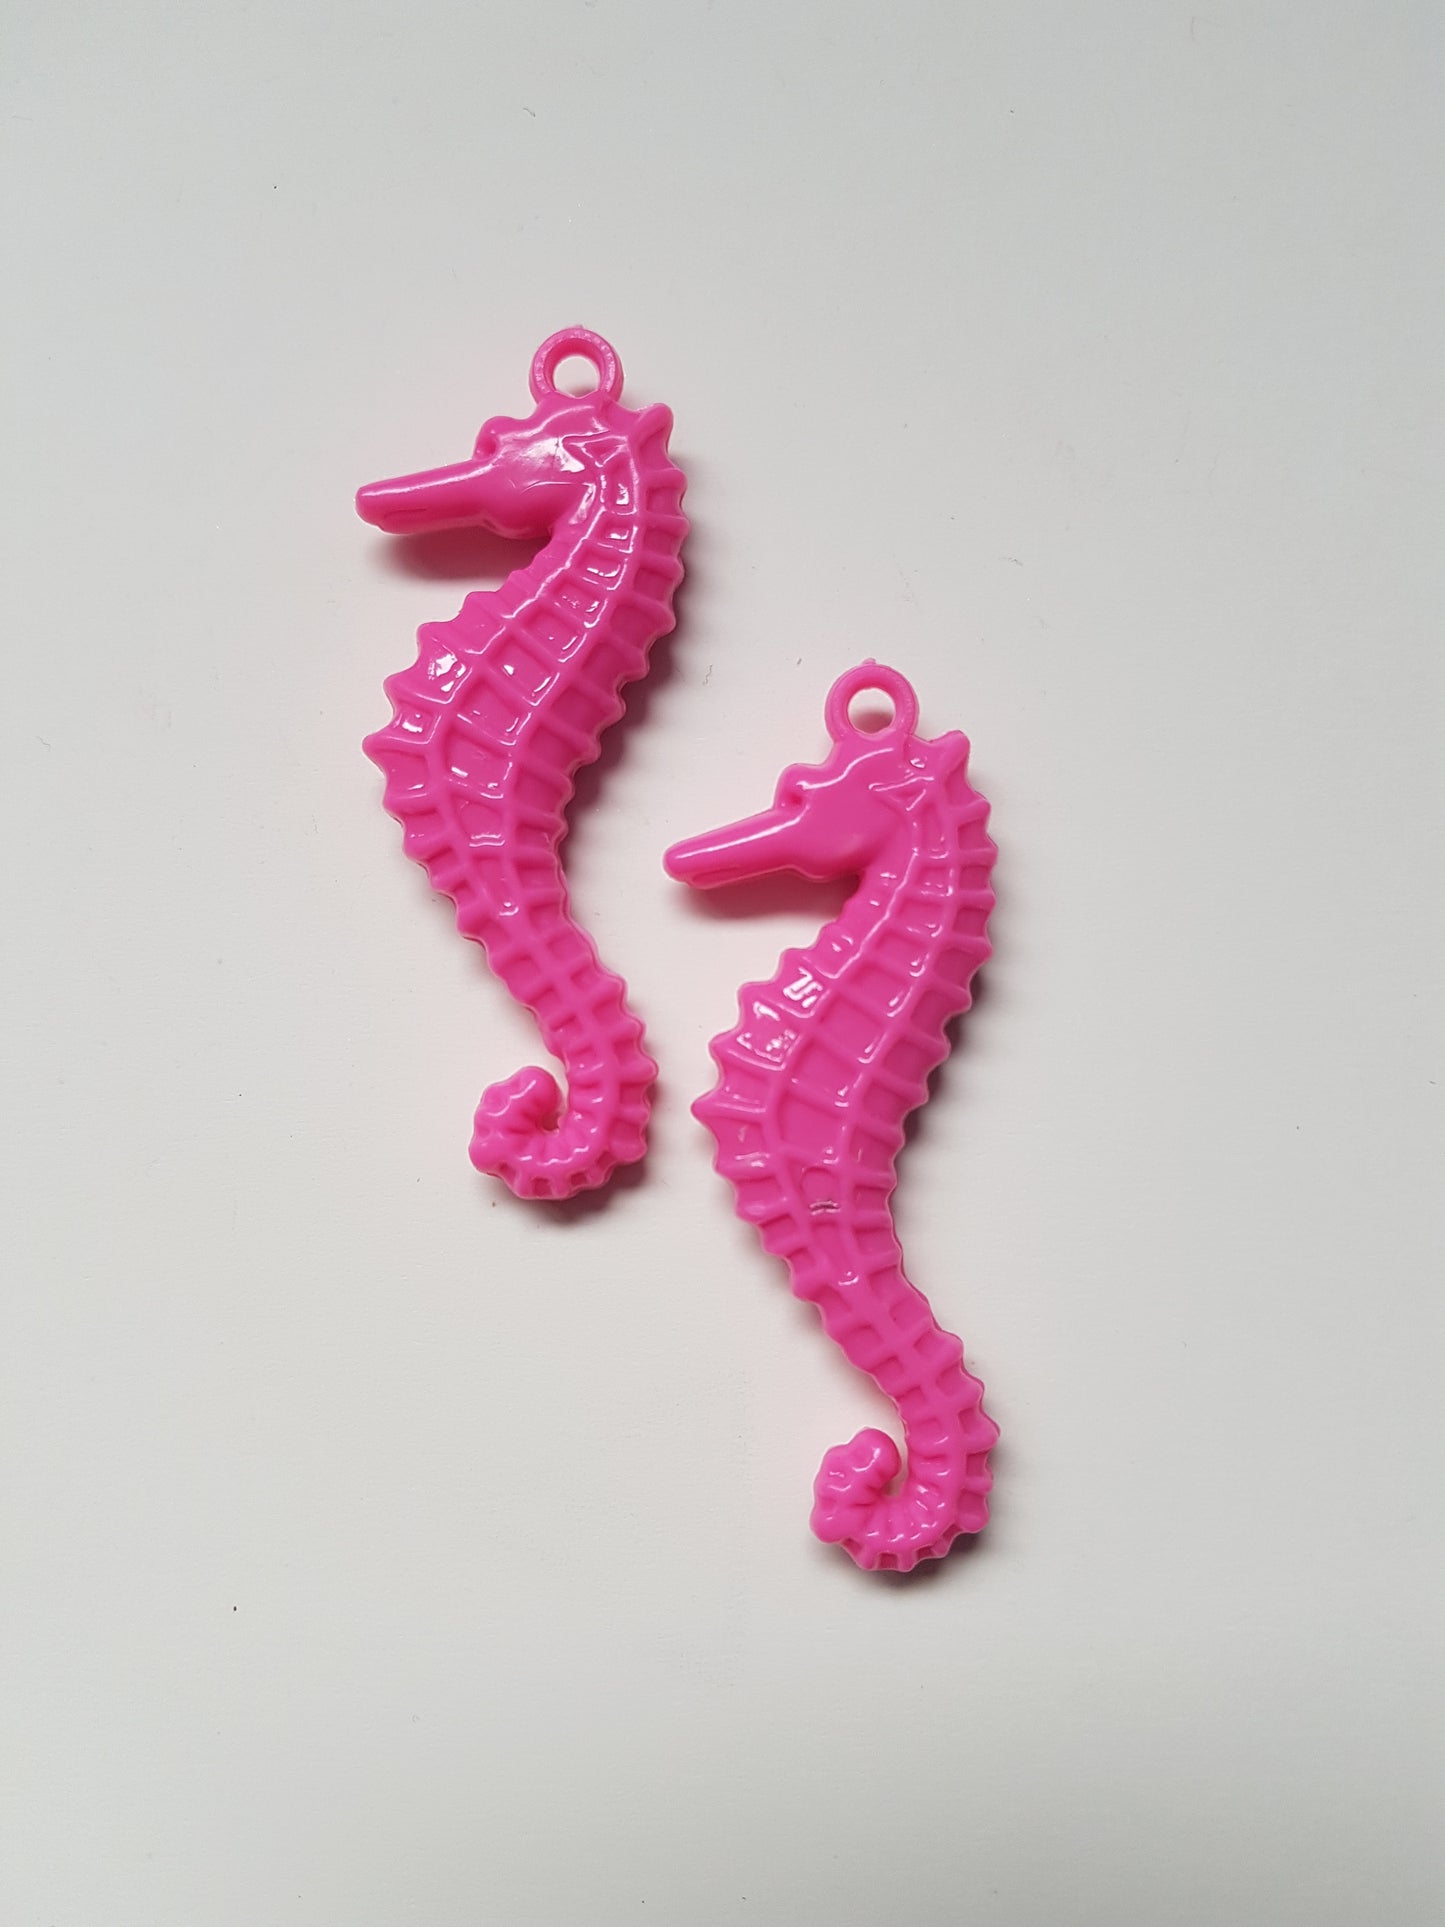 60mm acrylic seahorse pendants - bright pink 